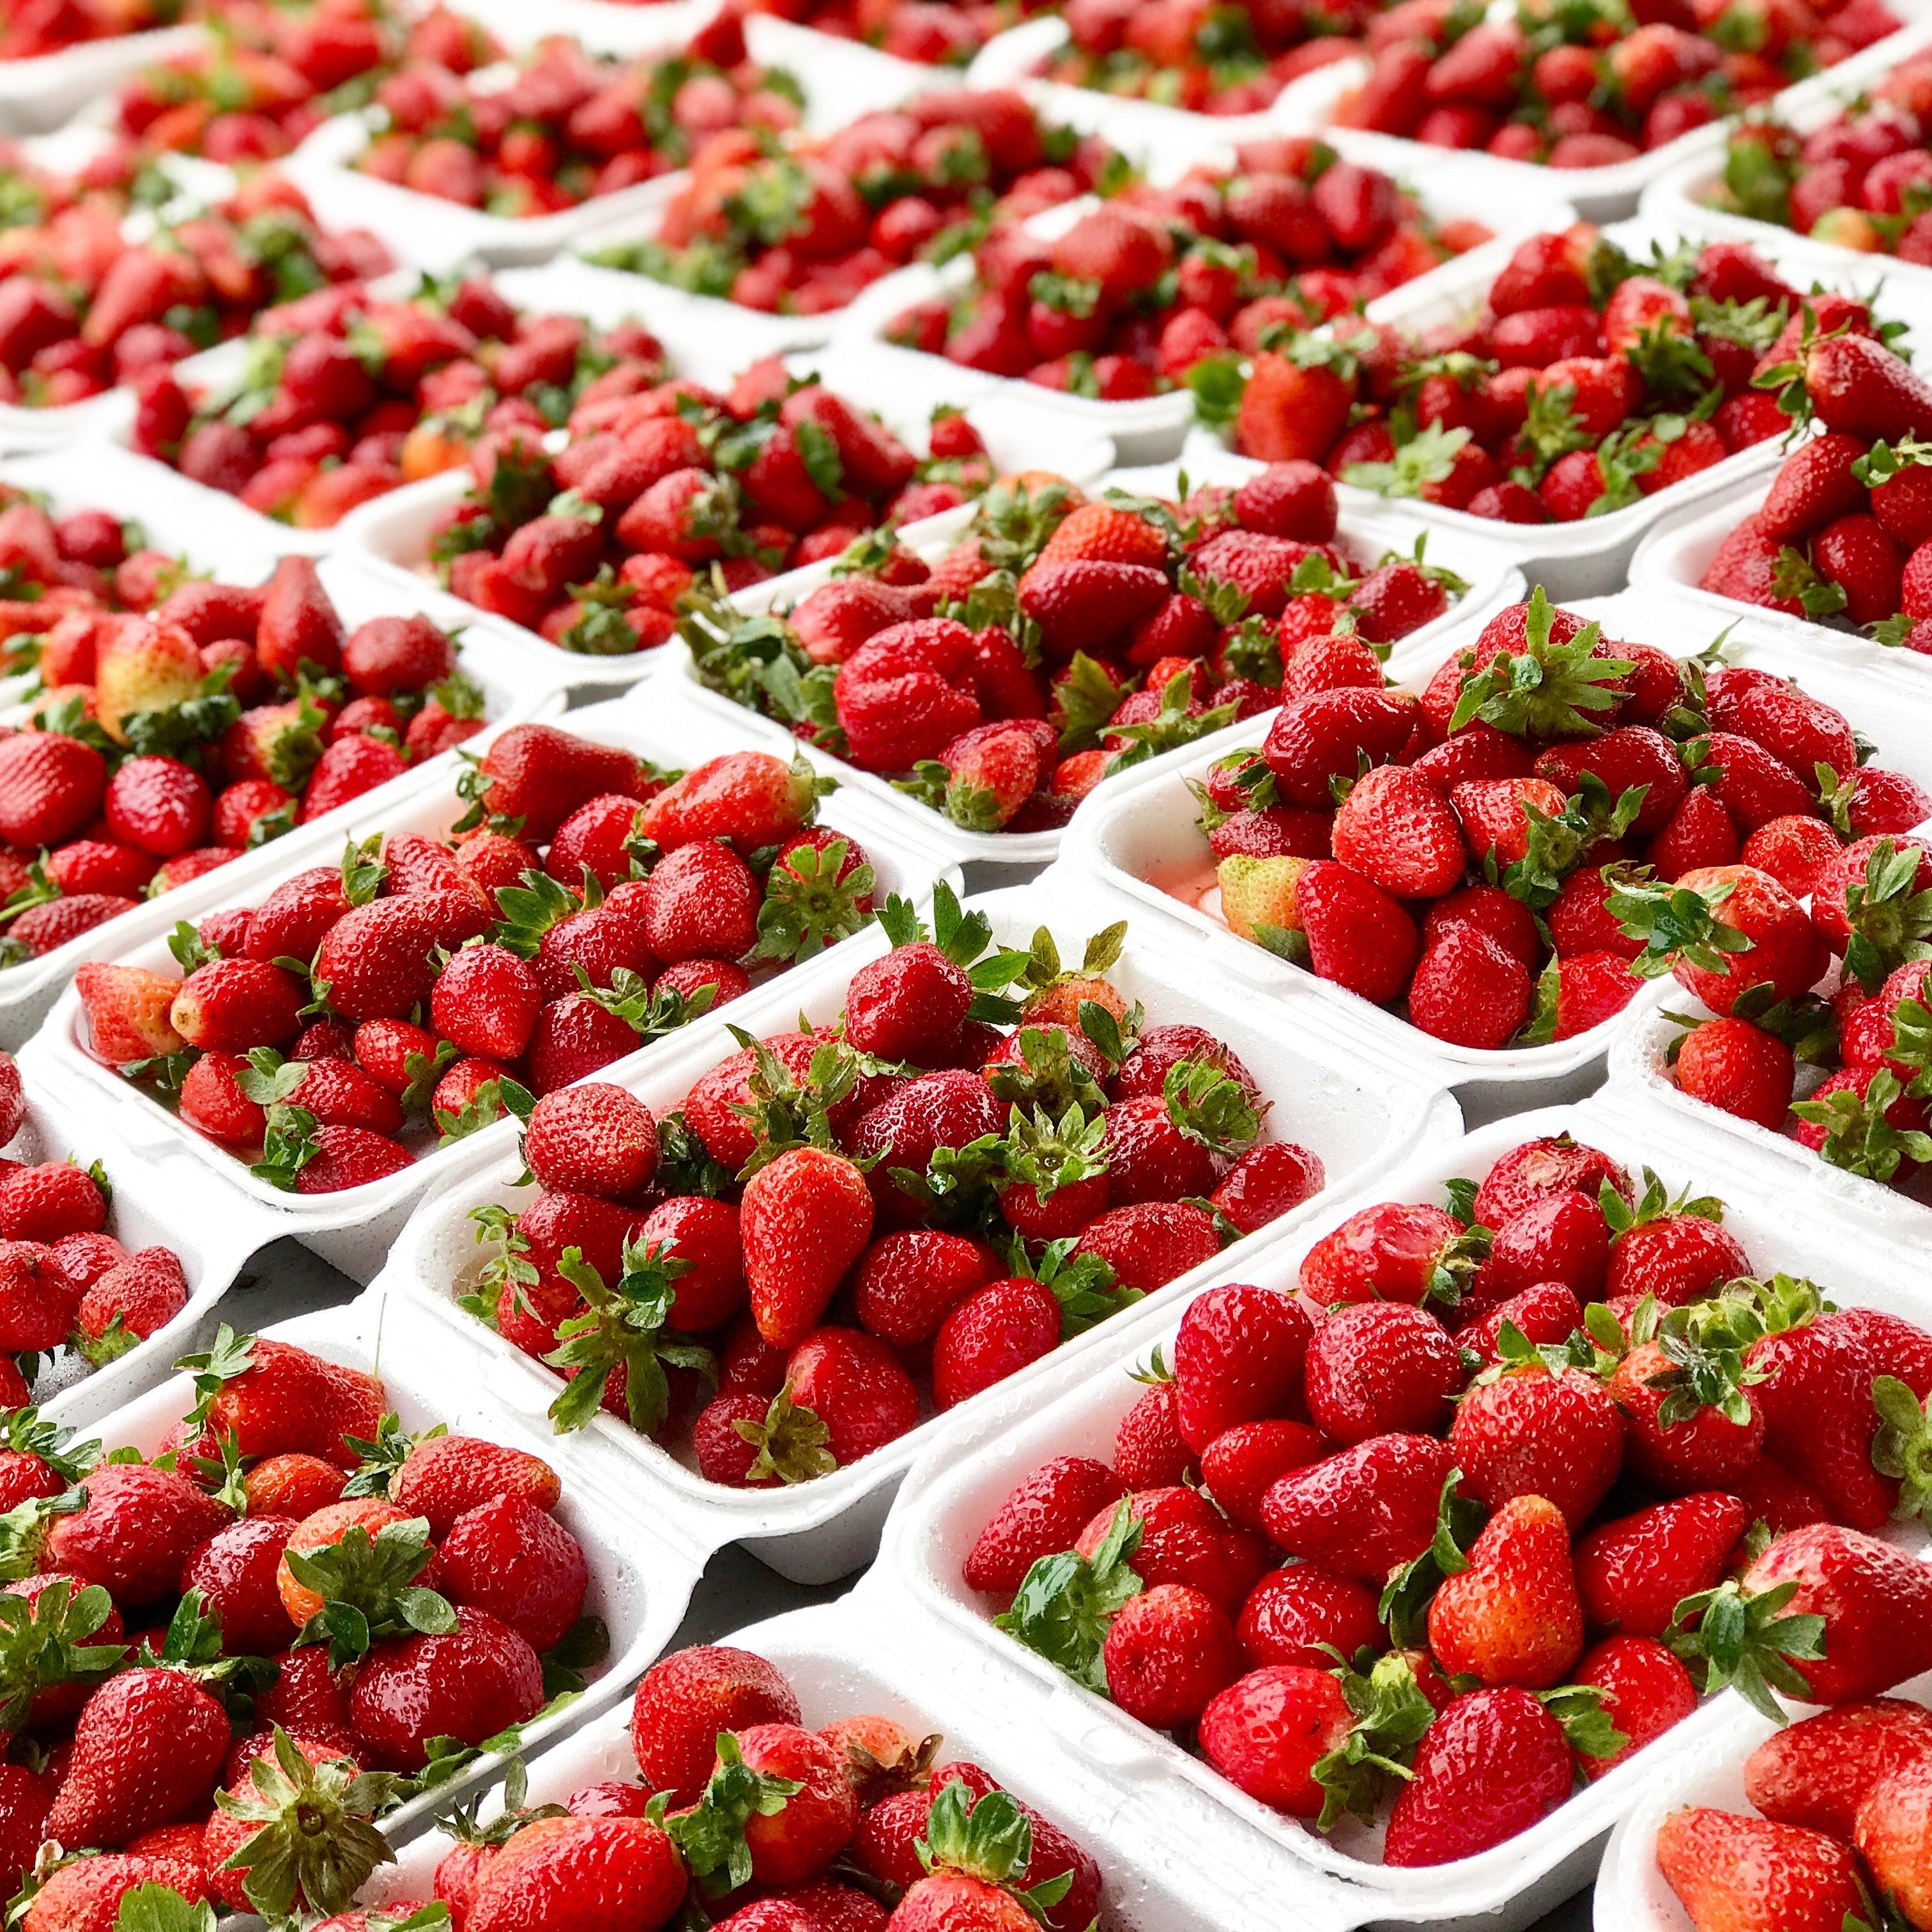 Punnets of strawberries. | Pexels